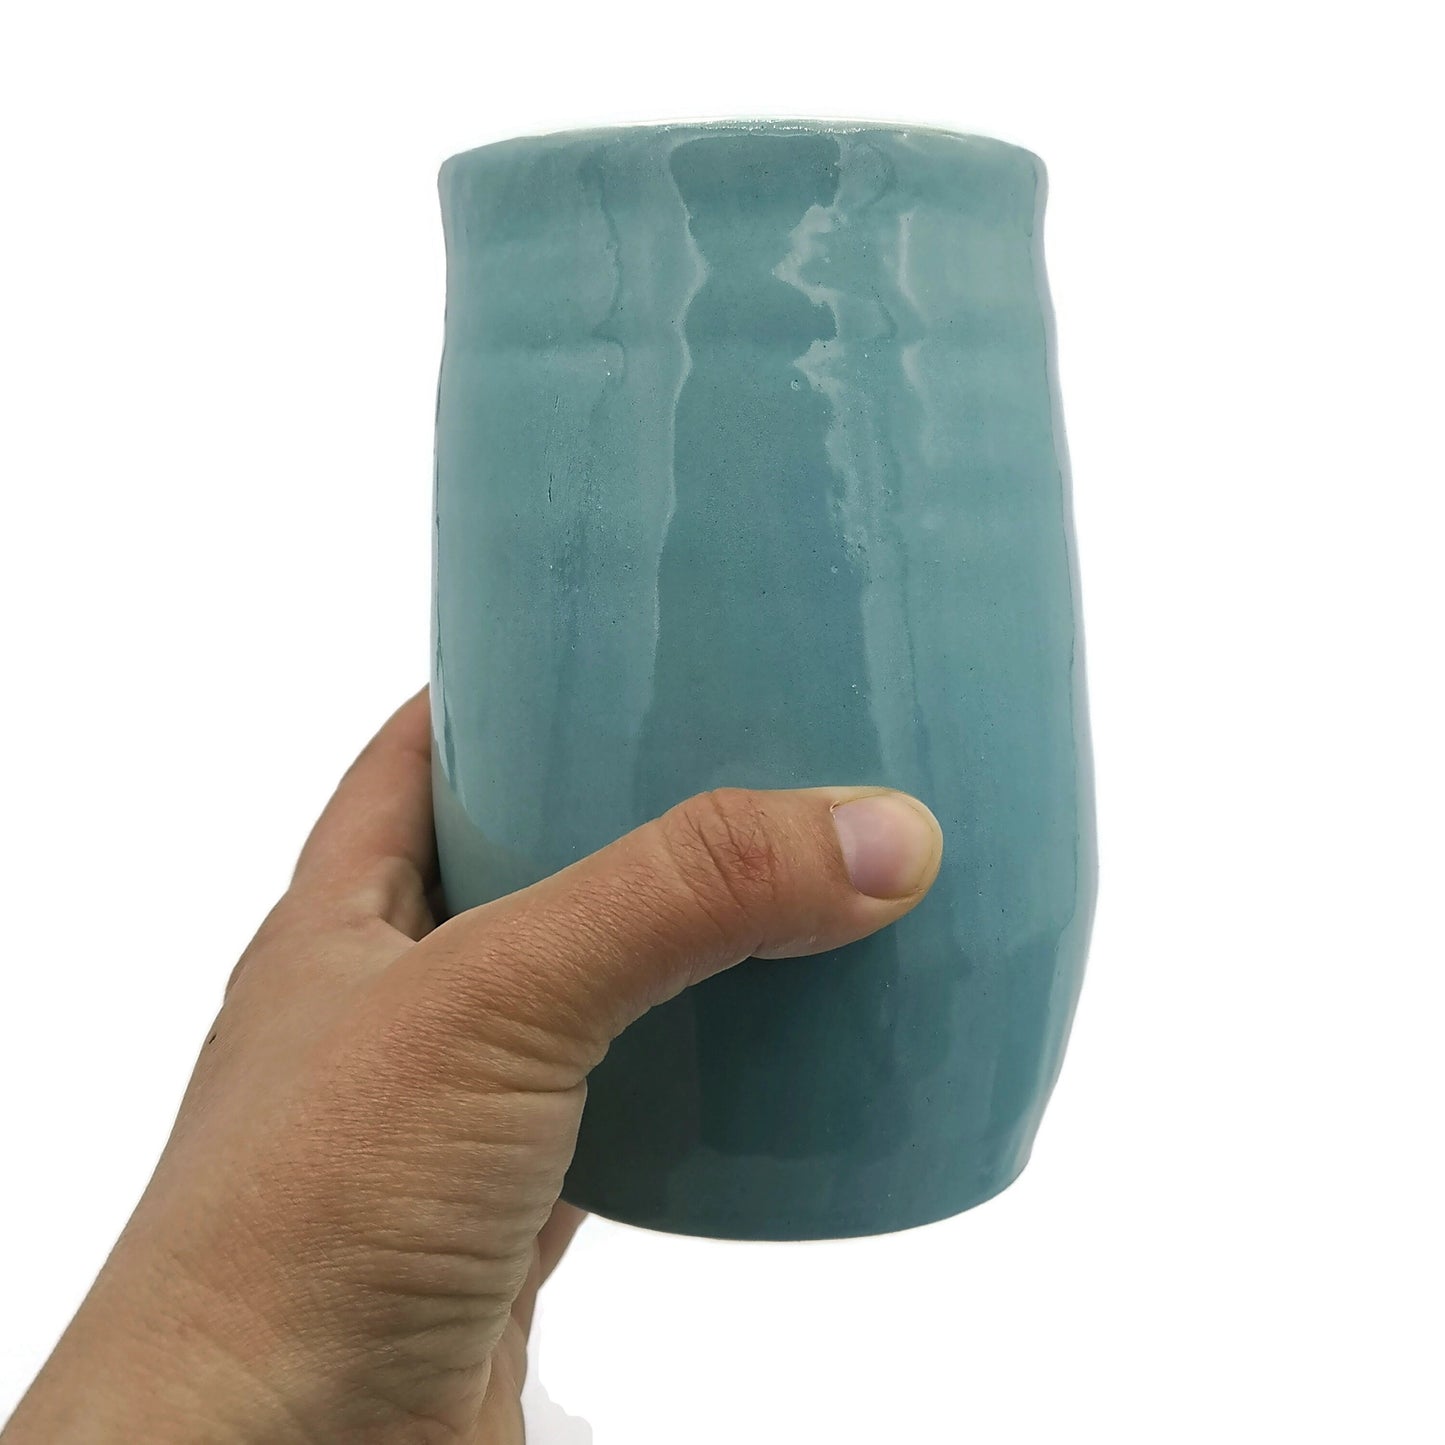 LARGE UTENSIL HOLDER, Handmade Ceramic Succulent Planter Vase With Drainage, Housewarming Gift First Home, Desk Organizer Crock - Ceramica Ana Rafael